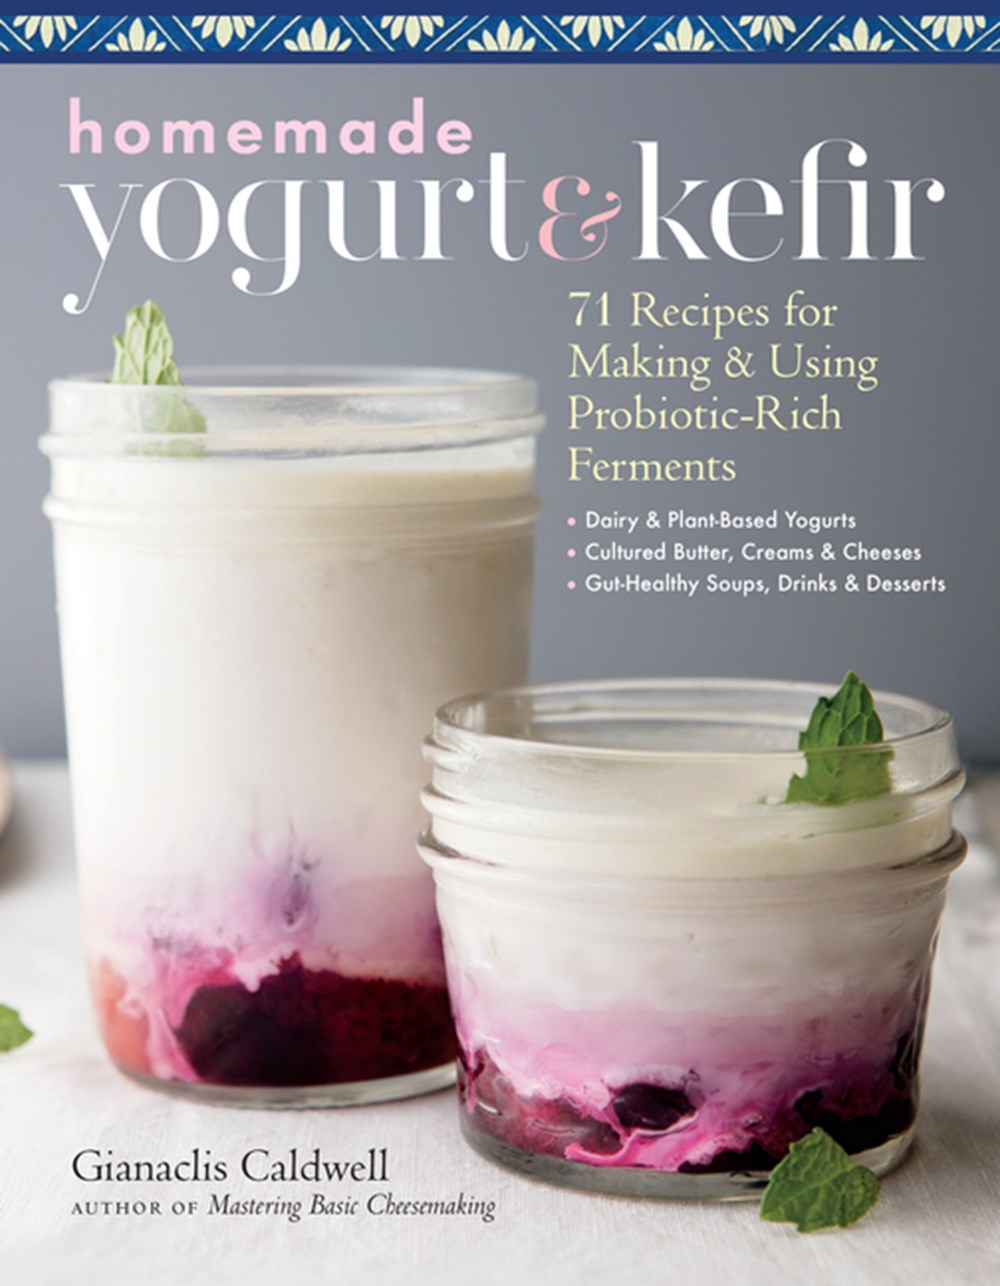 Homemade Yogurt & Kefir 71 Recipes for Making & Using Probiotic-Rich Ferments